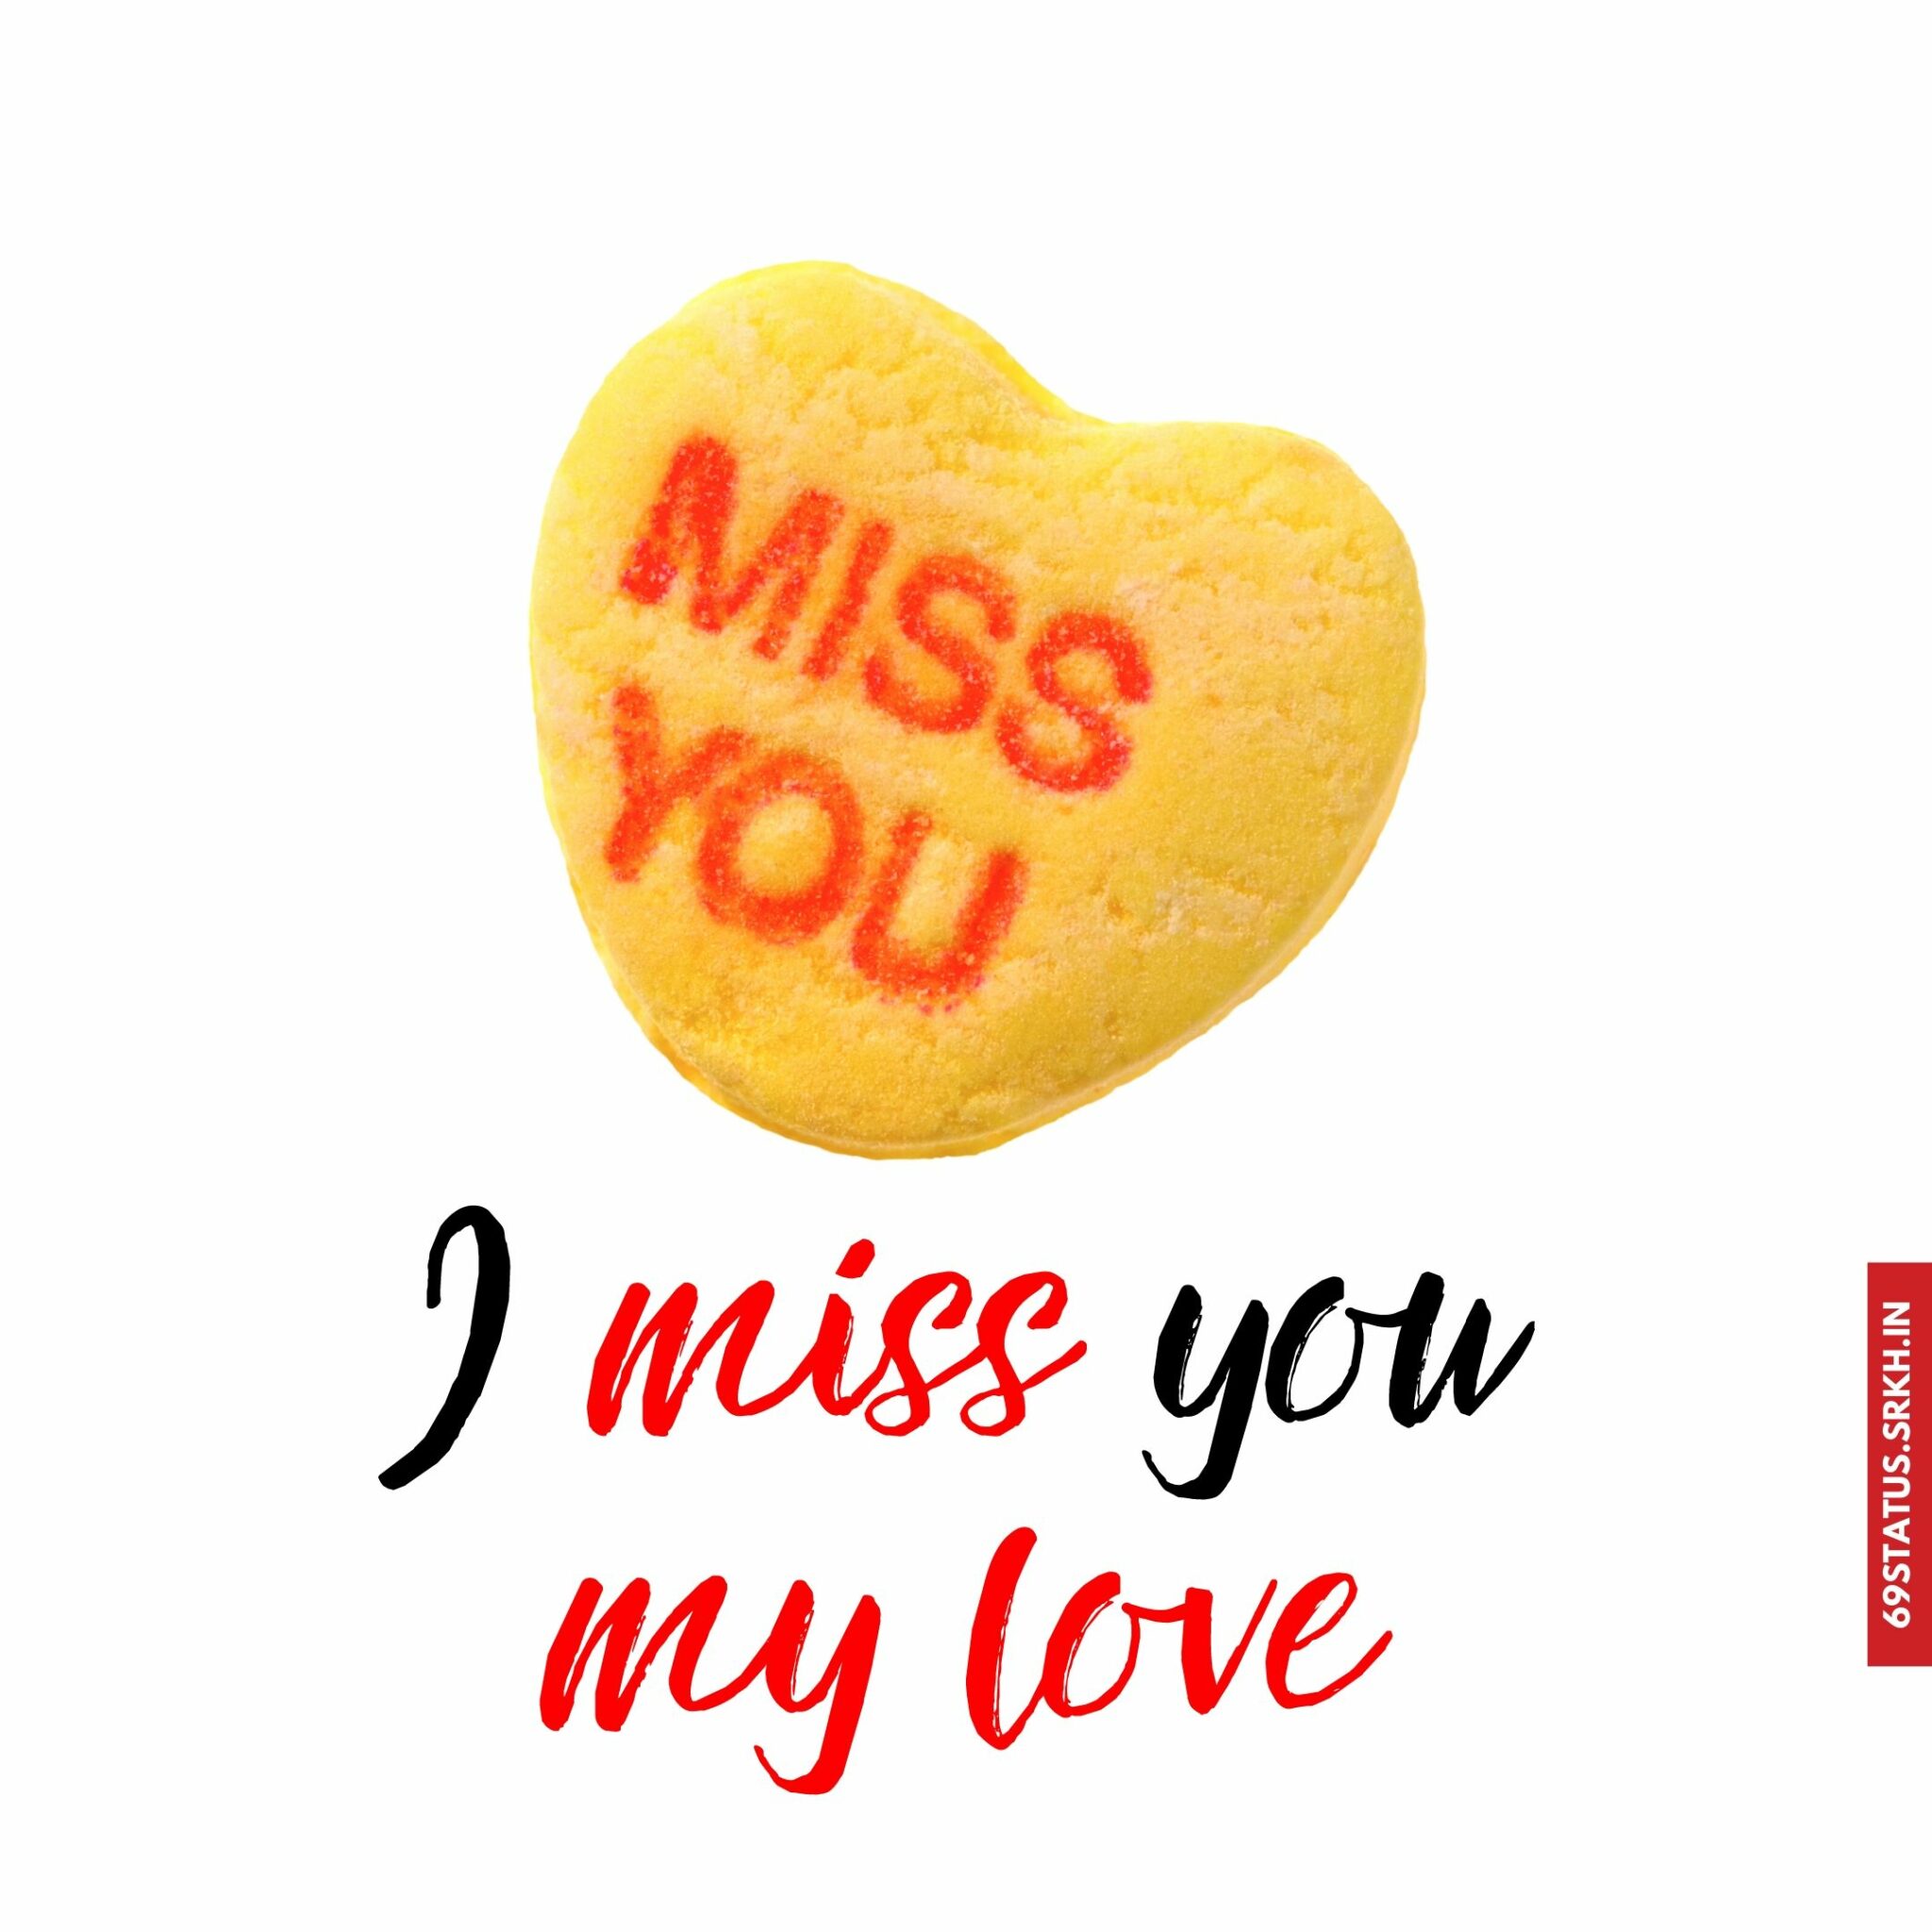 🔥 I miss you my love images Download free - Images SRkh